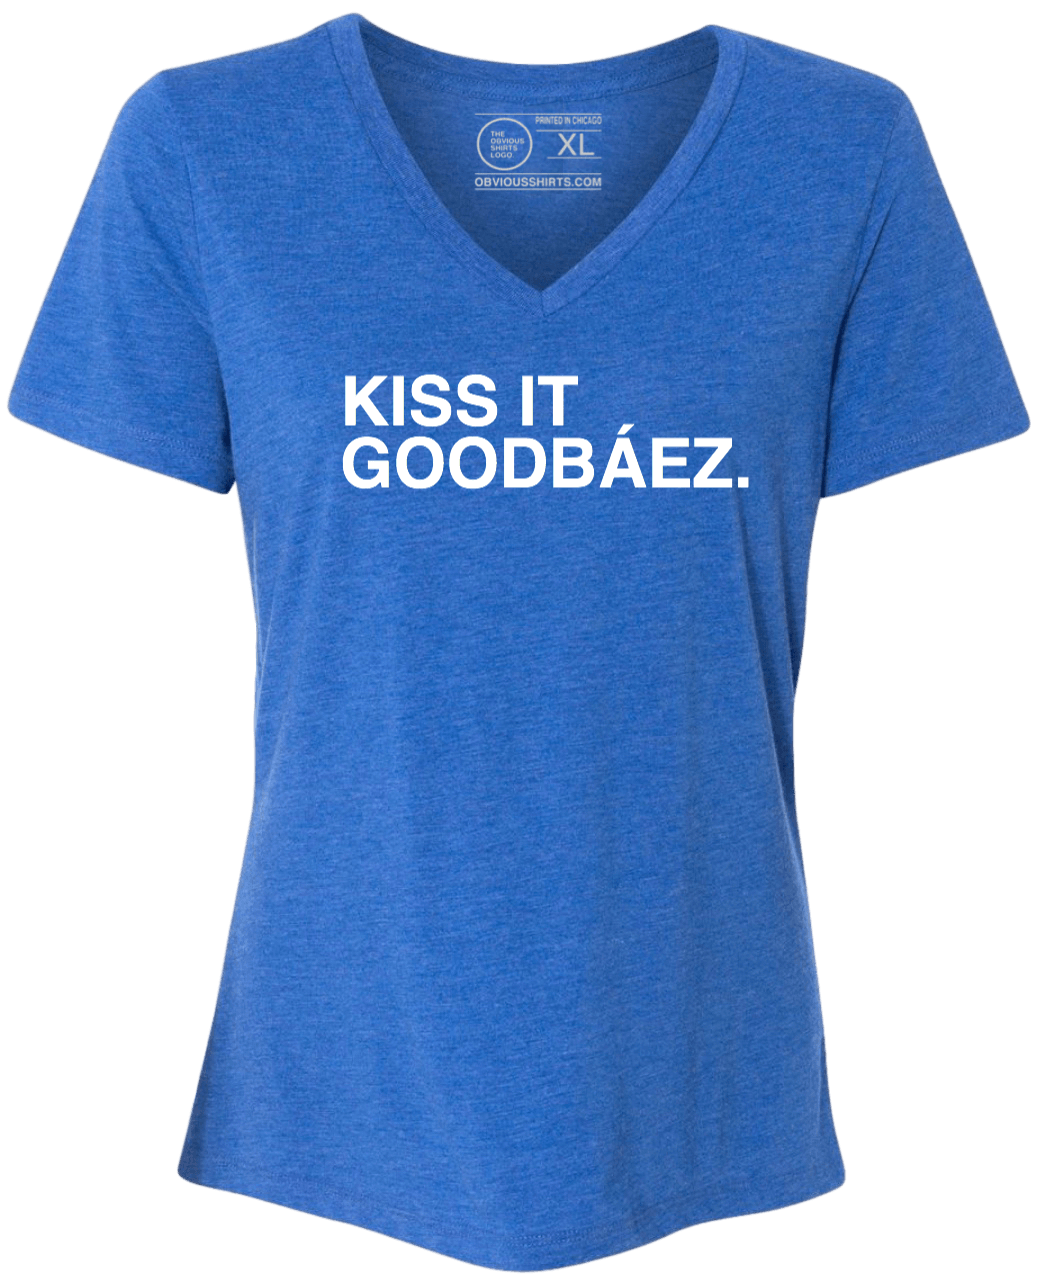 KISS IT GOODBAEZ. (WOMEN'S V-NECK) - OBVIOUS SHIRTS.